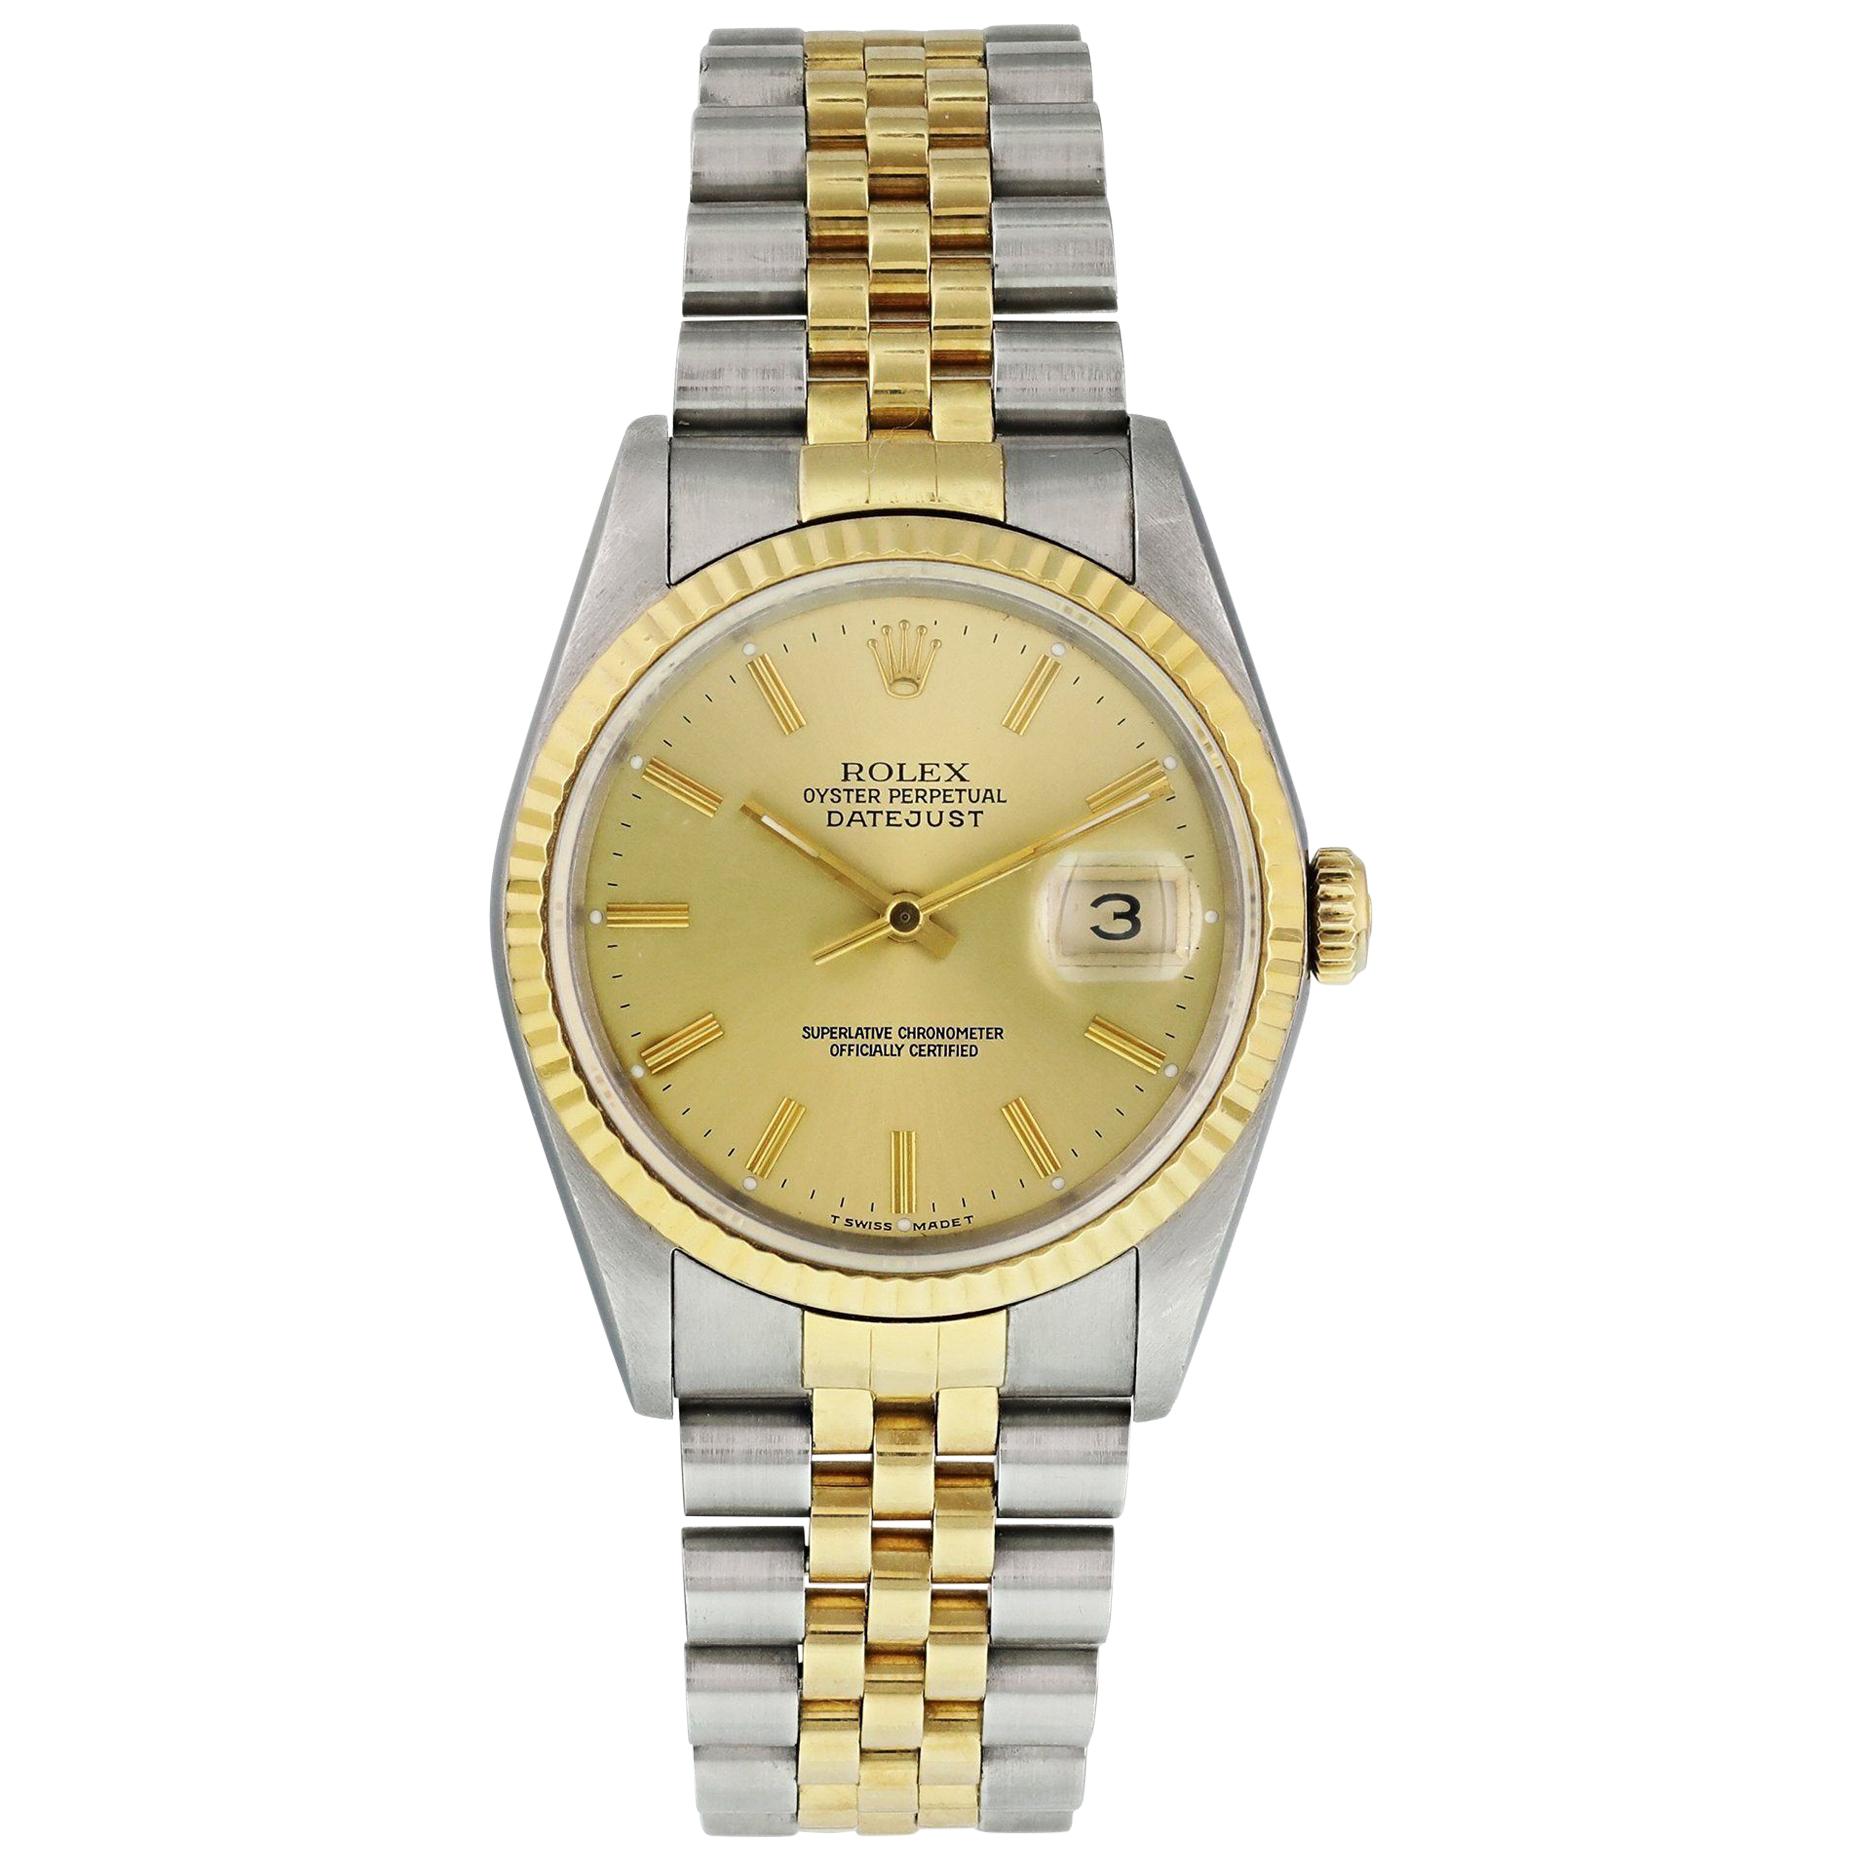 Rolex Datejust 16233 Men's Watch For Sale